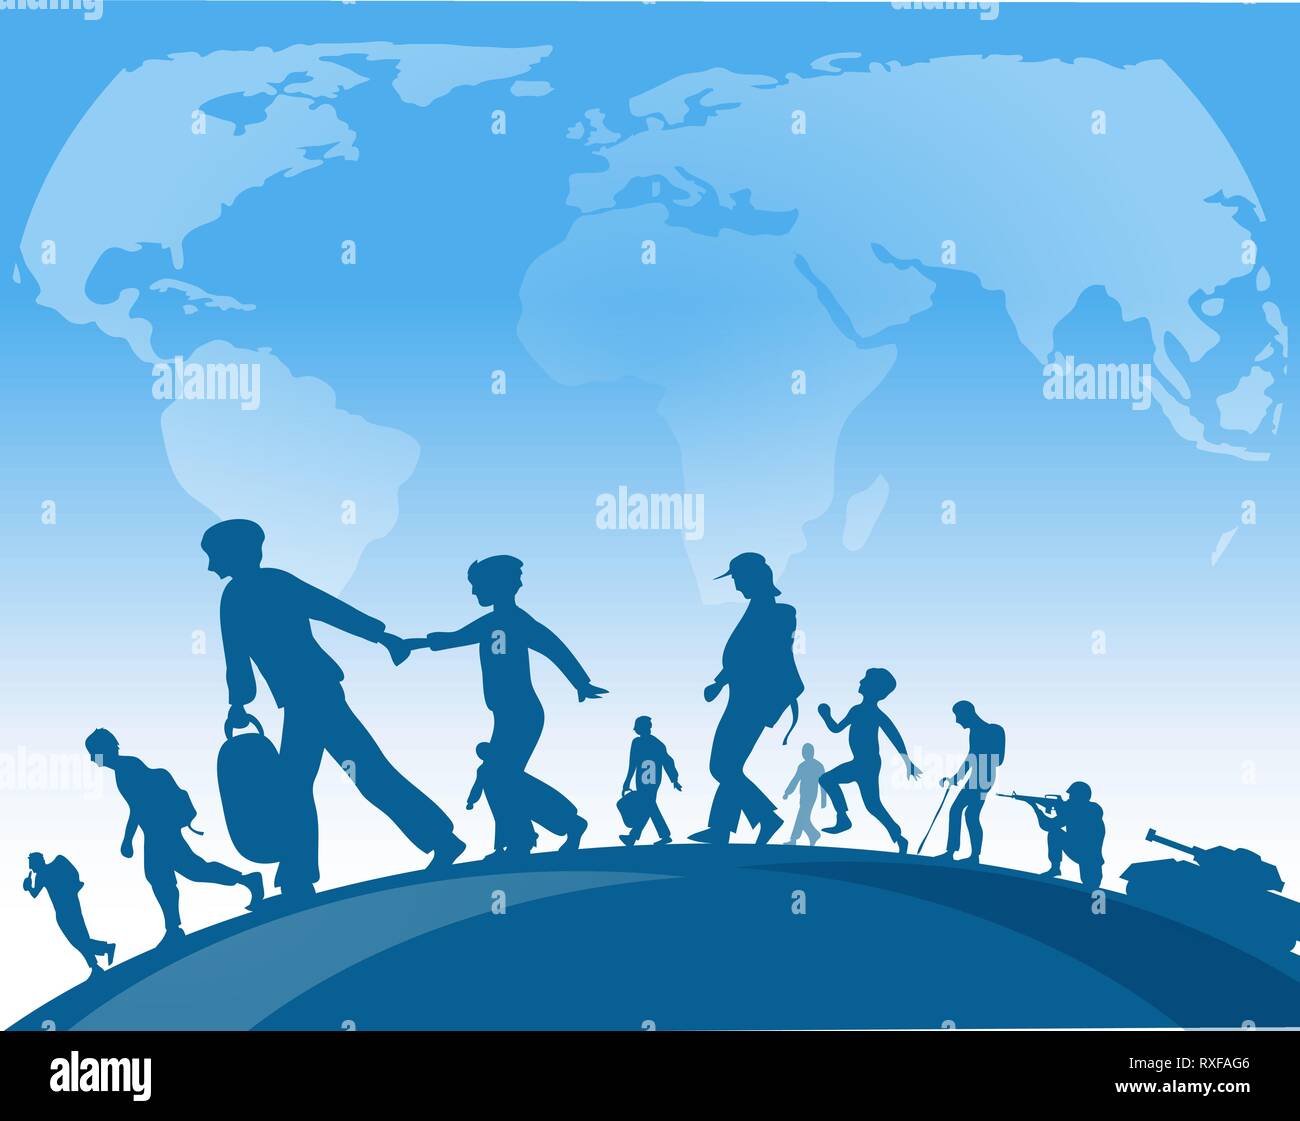 immigration people walk under world map background .vector illustration Stock Vector